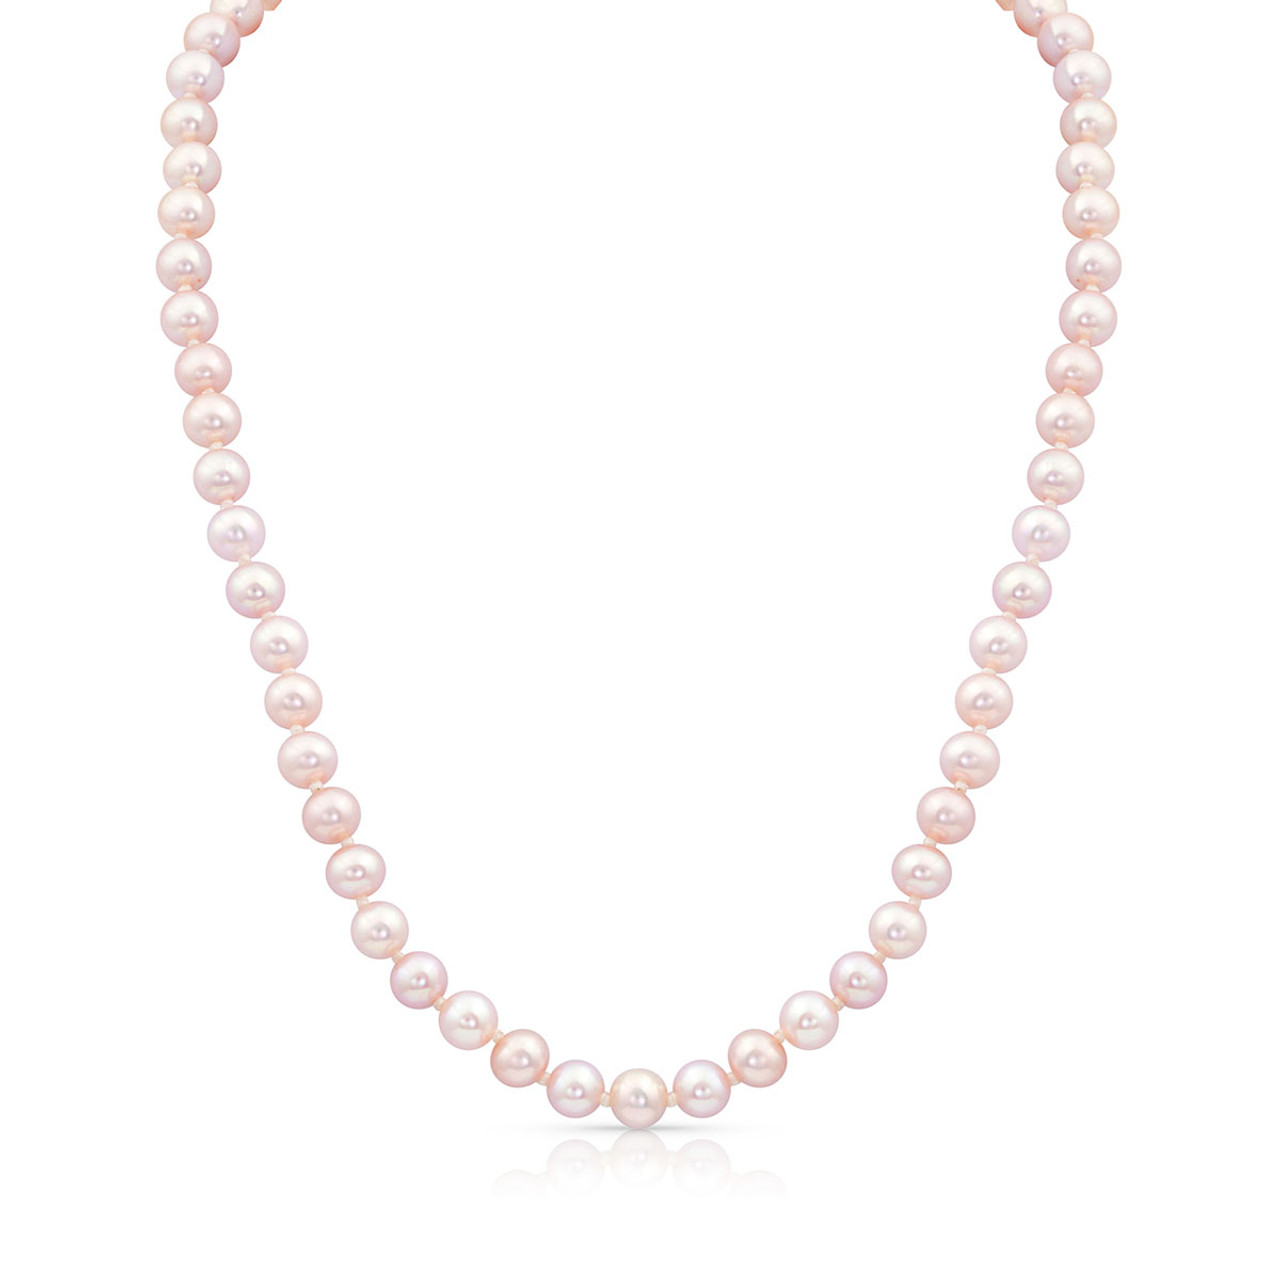 Precious Pearl Necklace - The Vintage Pearl